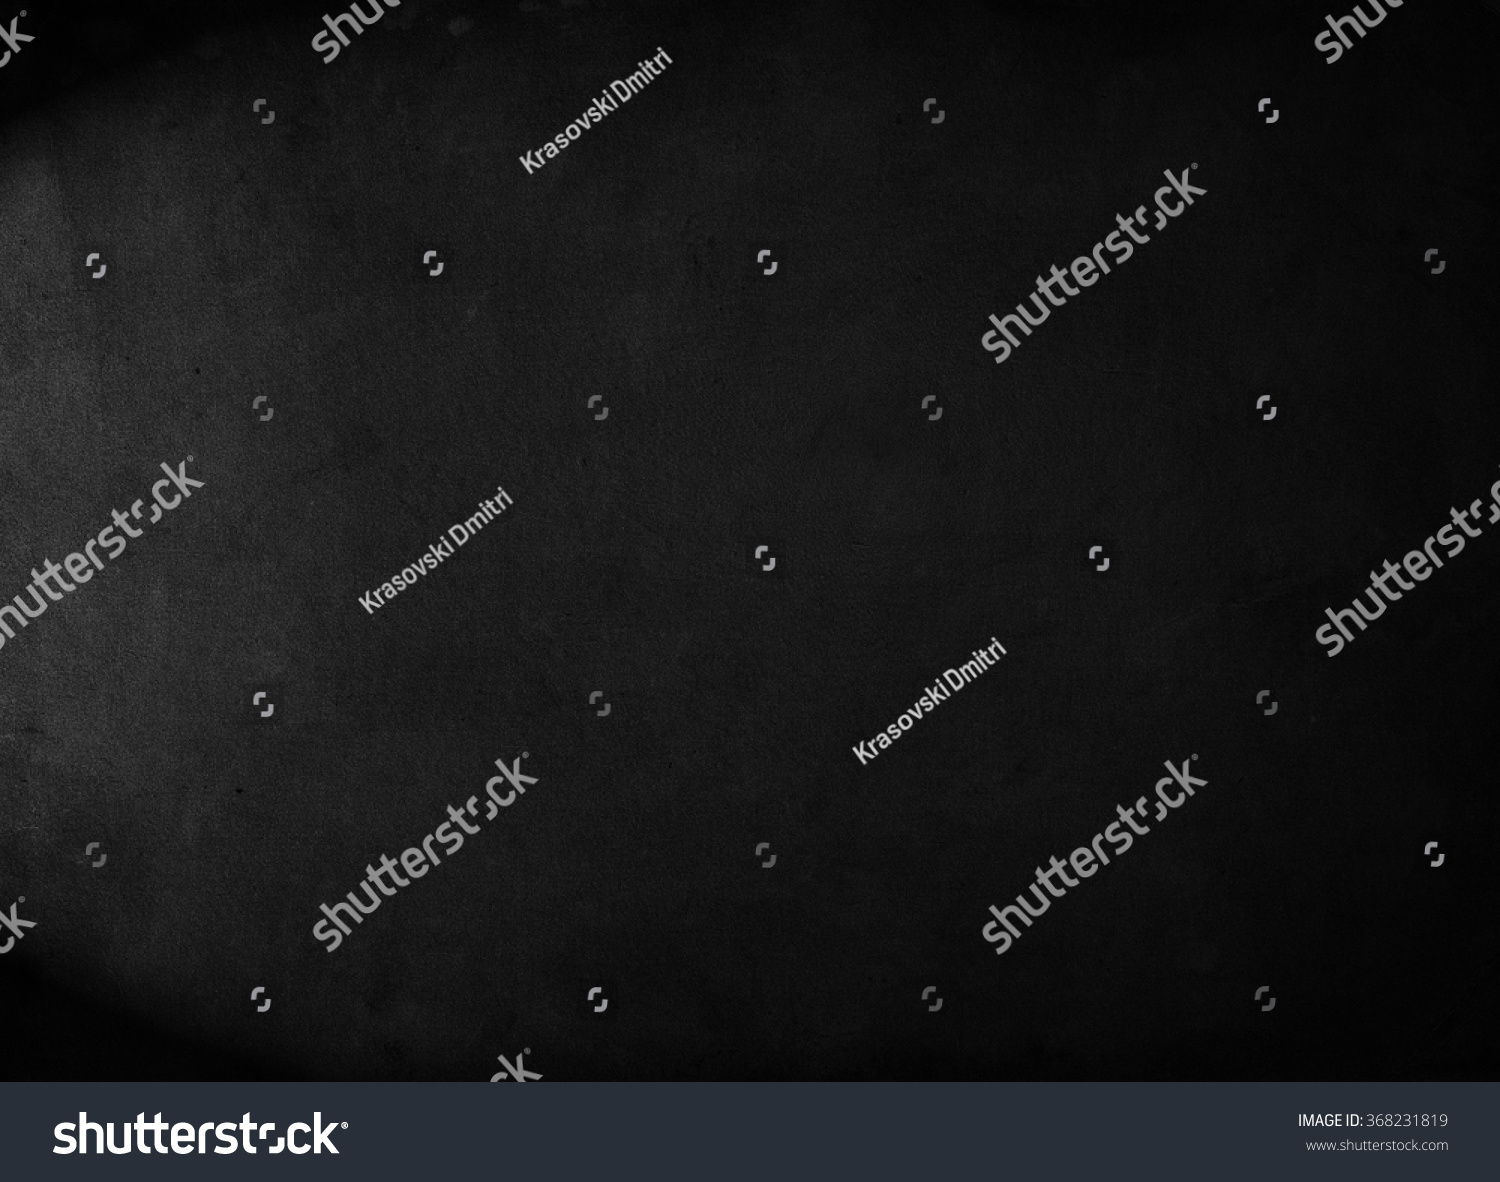 Black Background Grunge Chalkboard Stock Photo 368231819 - Shutterstock